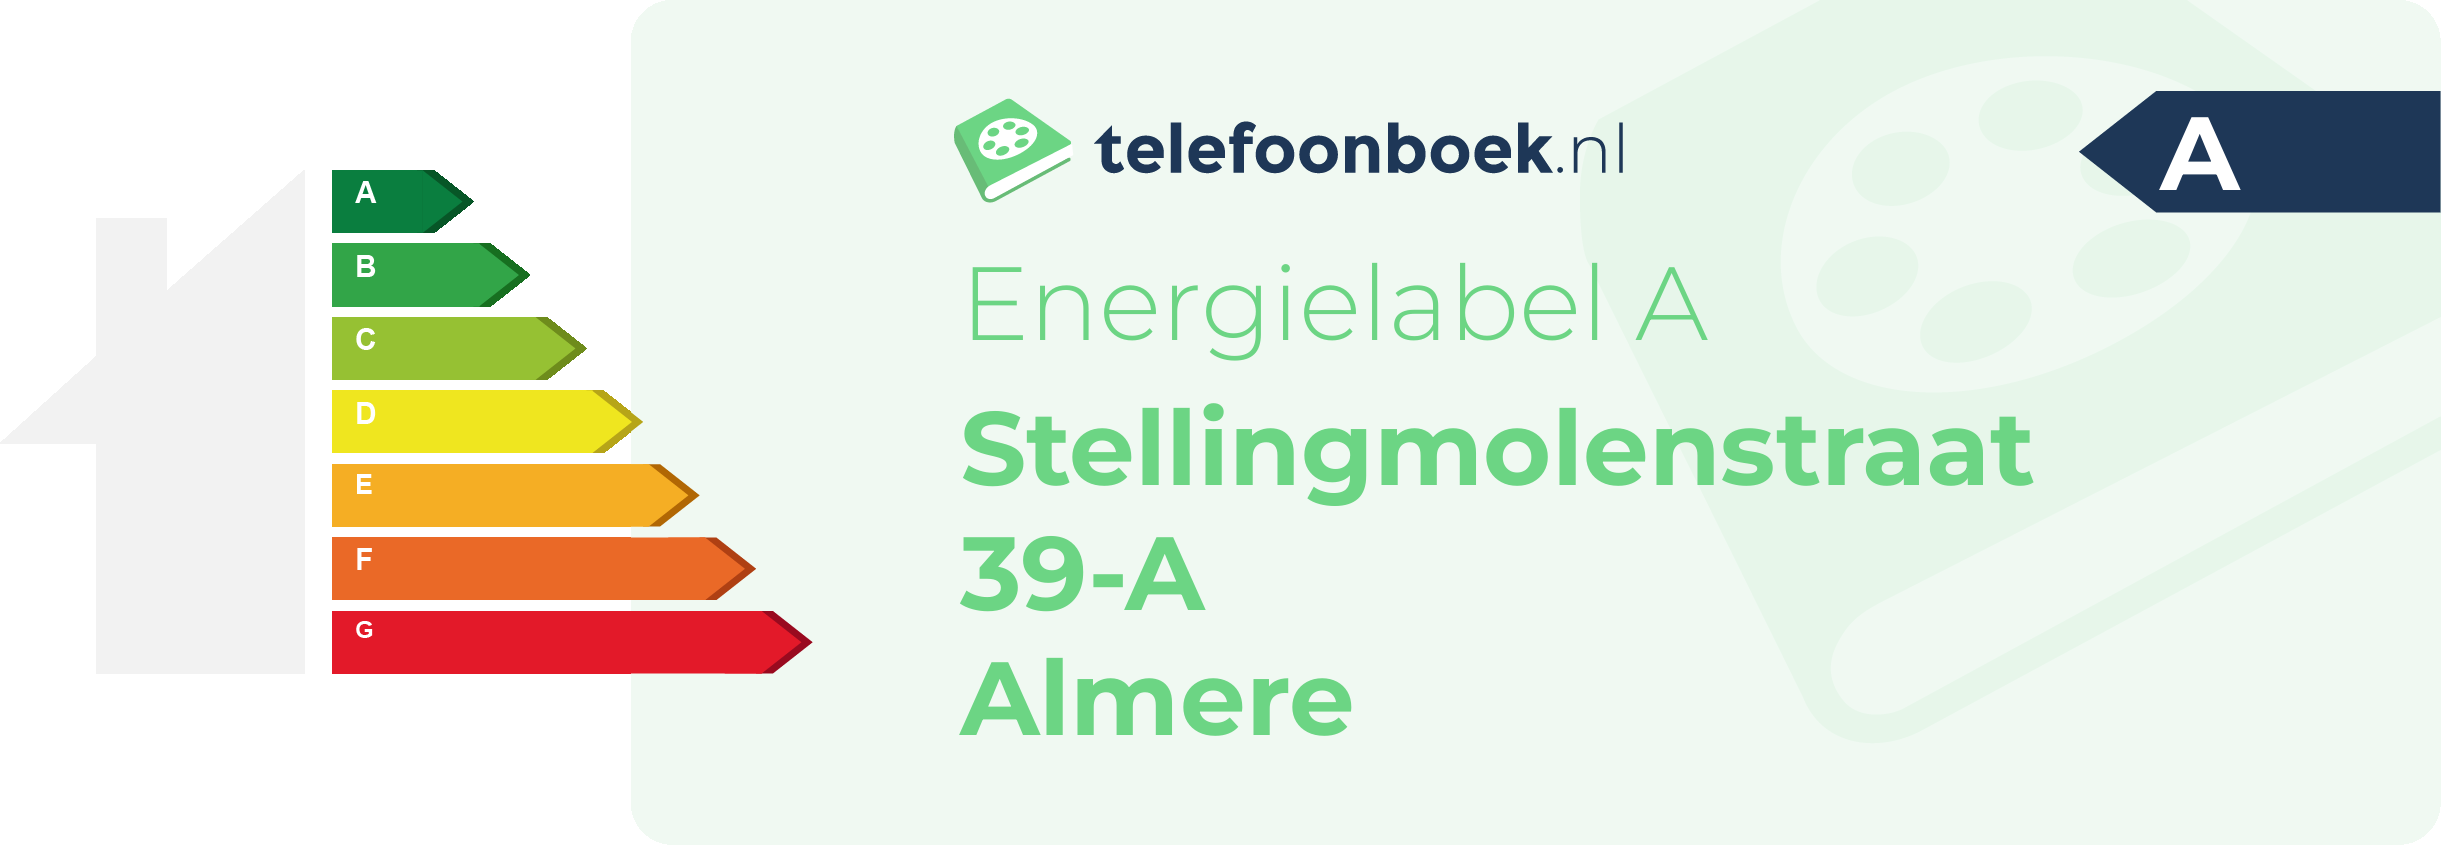 Energielabel Stellingmolenstraat 39-A Almere